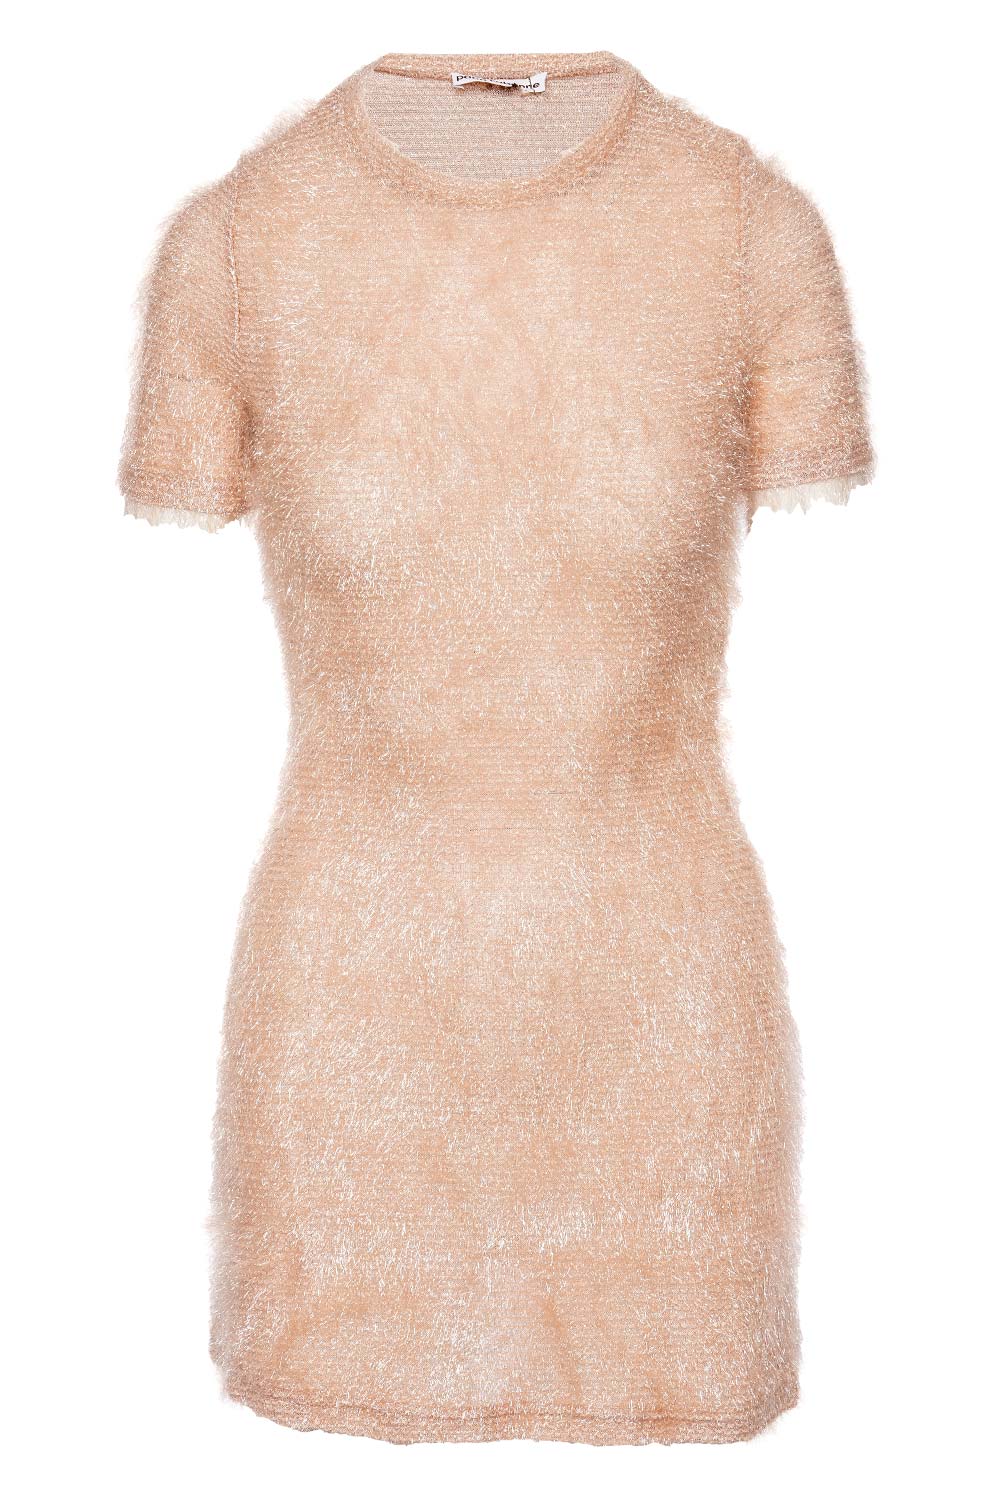 Paco Rabanne Light Pink Eyelash Short Sleeve Mini Dress